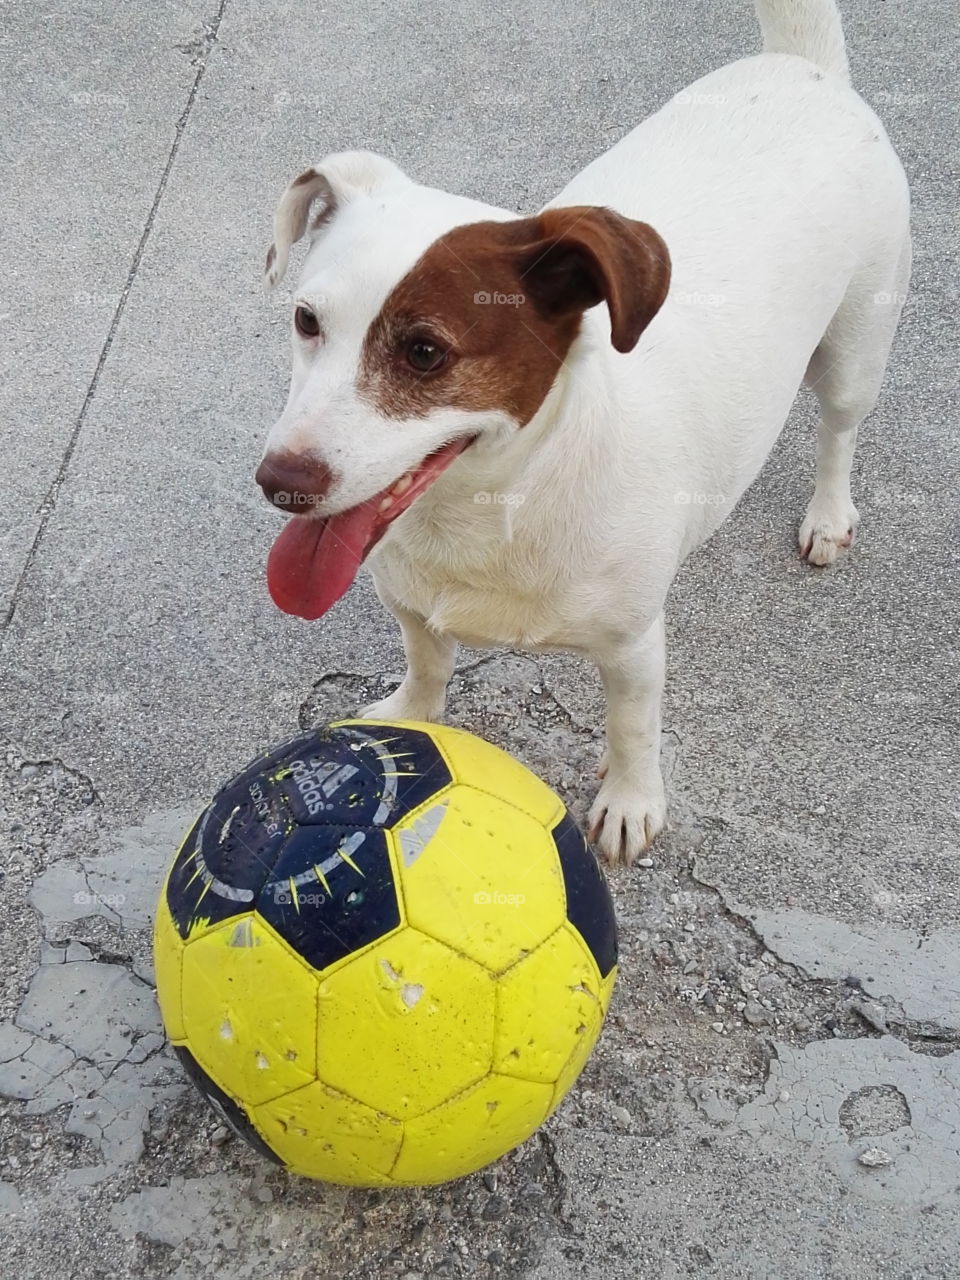 Dog playing soccer